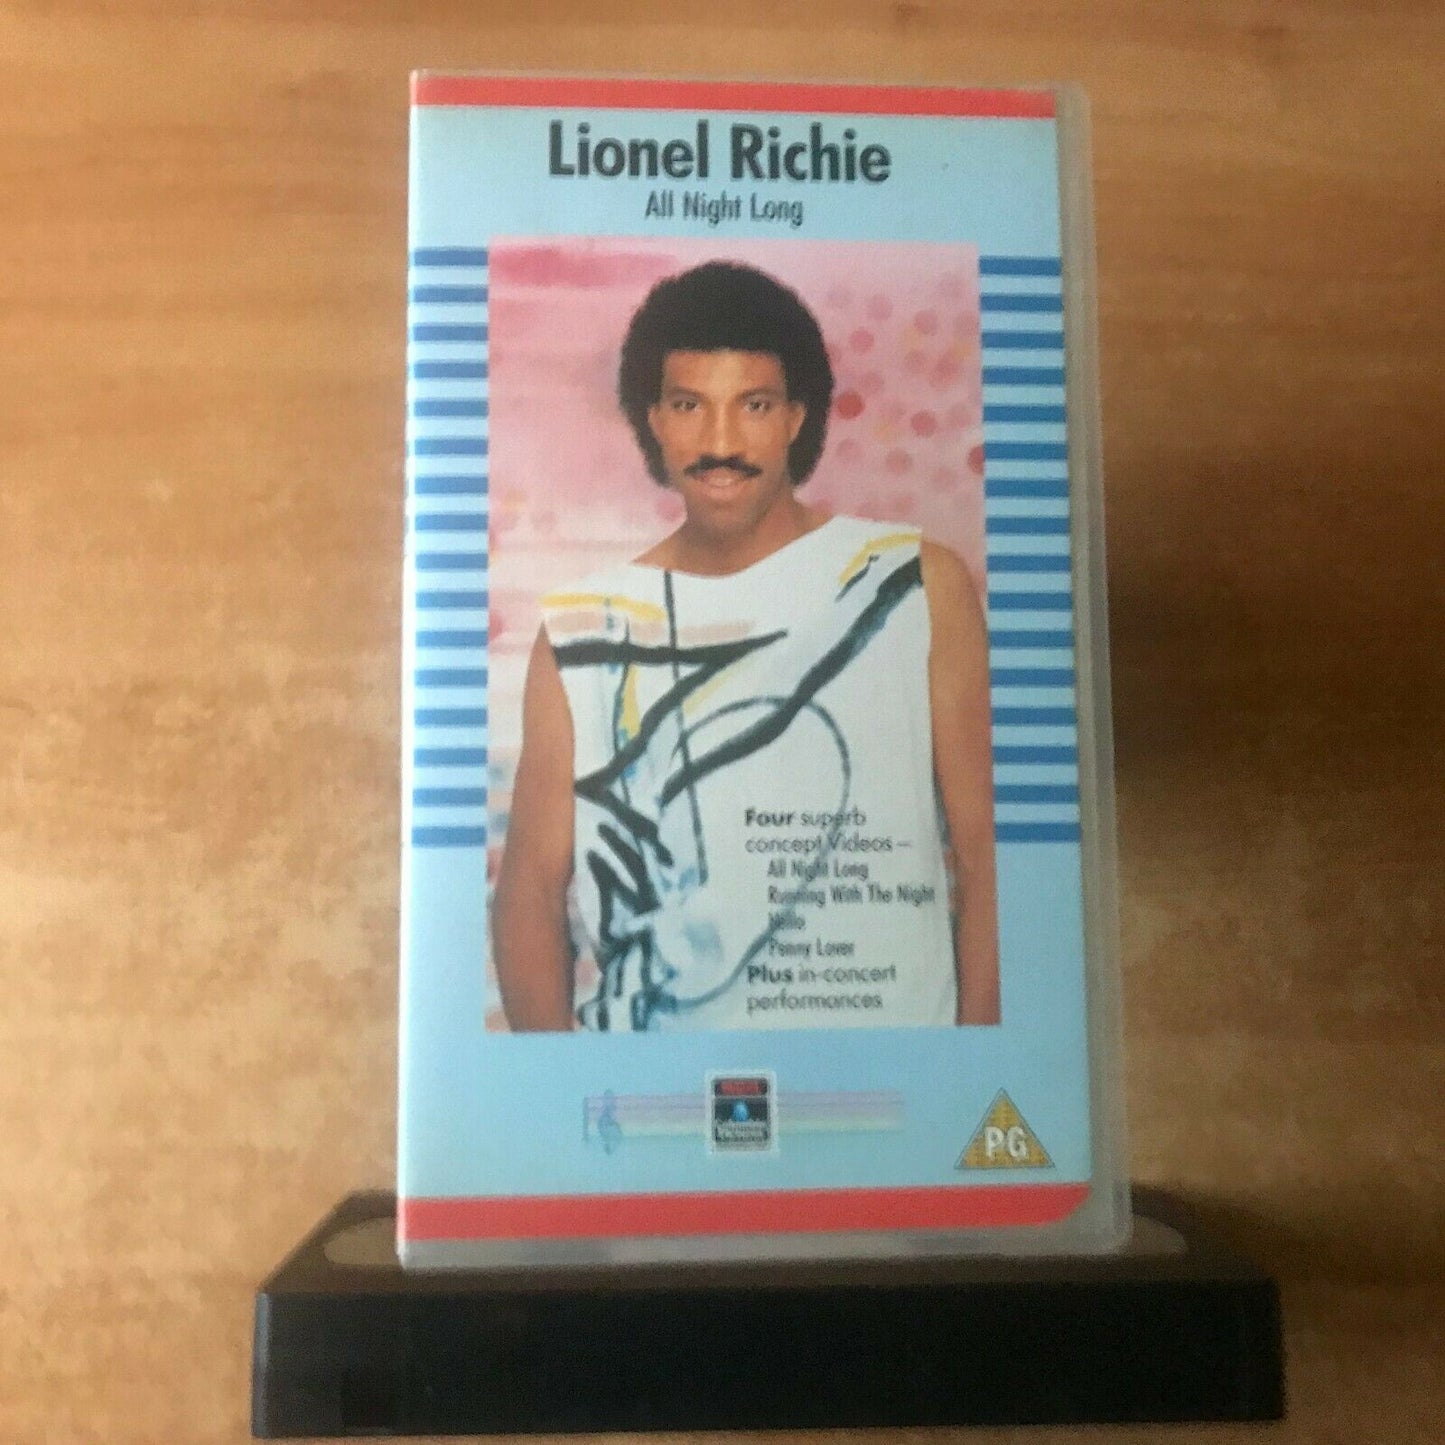 Lionel Richie: All Night Long [Music Videos] Live Performances - Music - Pal VHS-